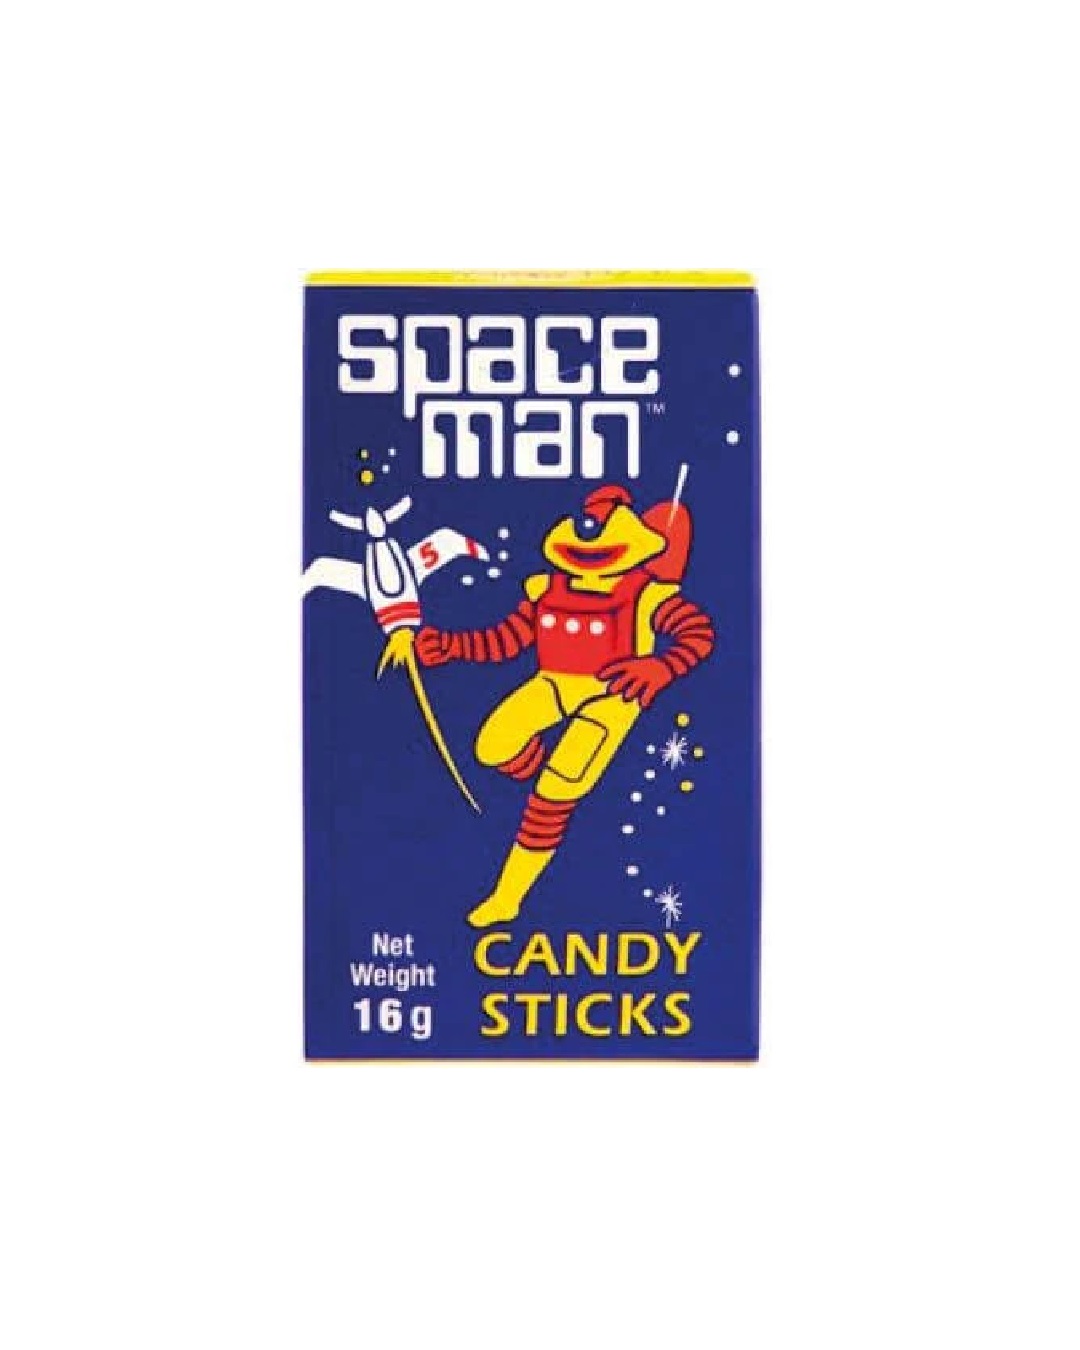 Spaceman candy sticks